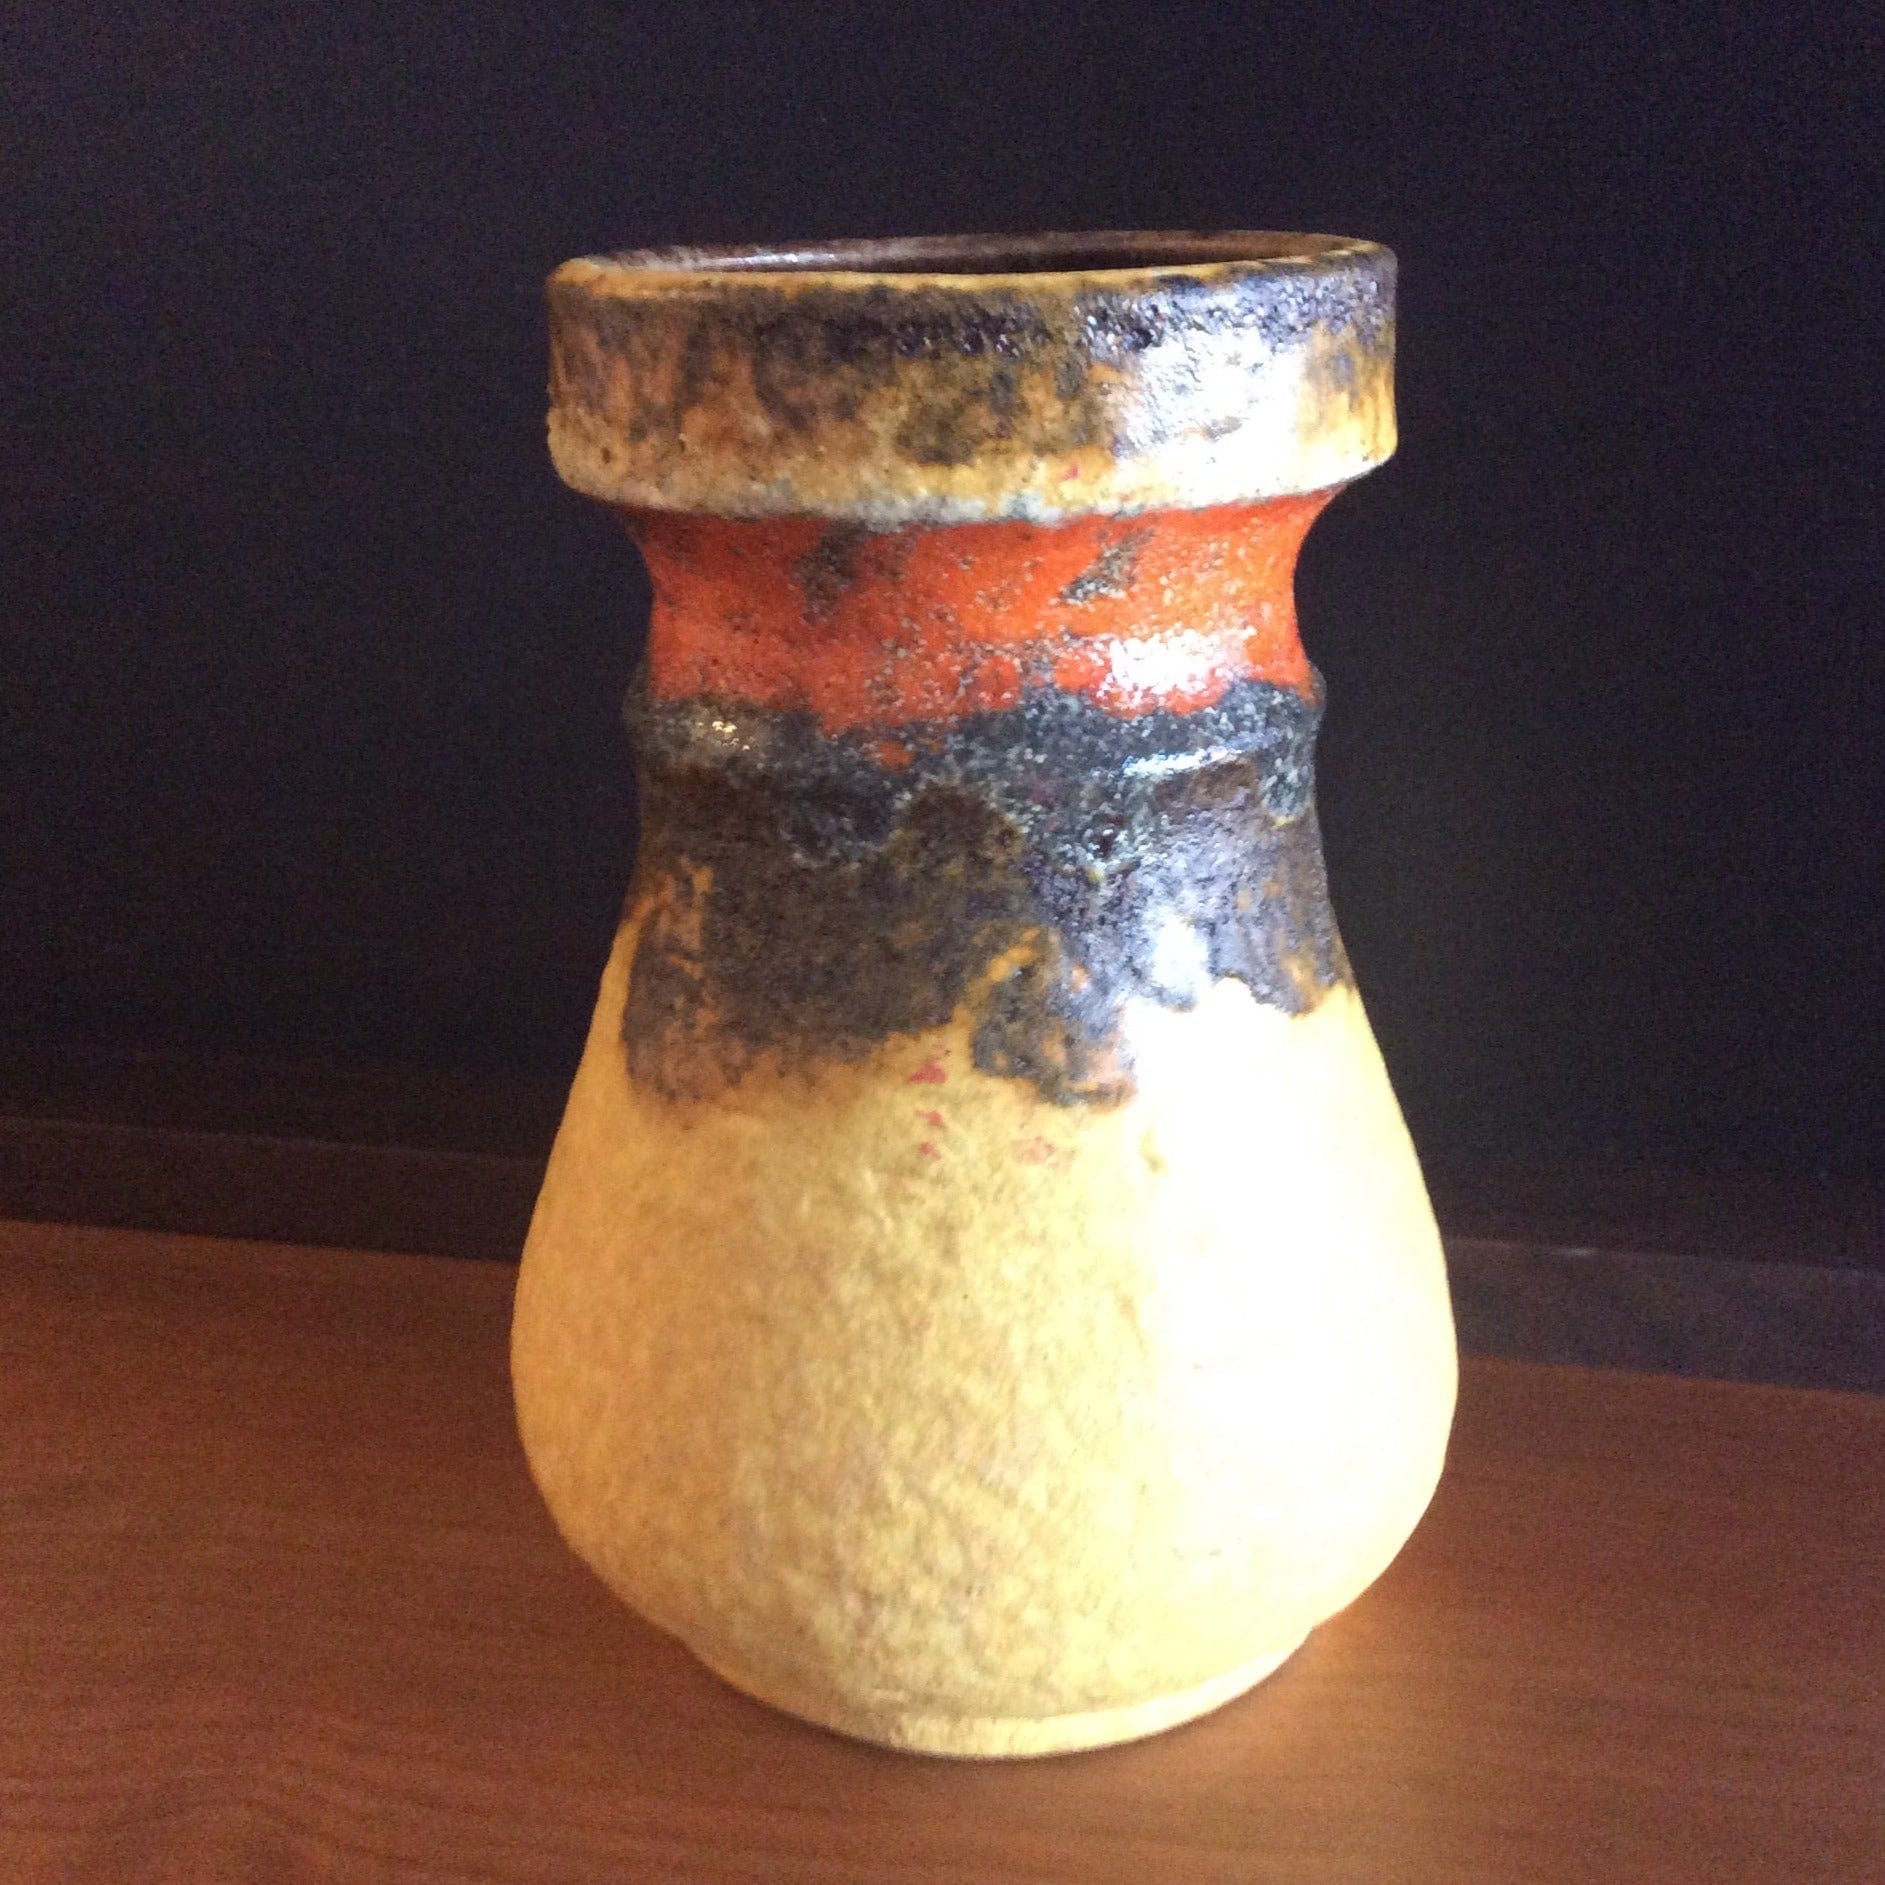 Small Pottery Vase